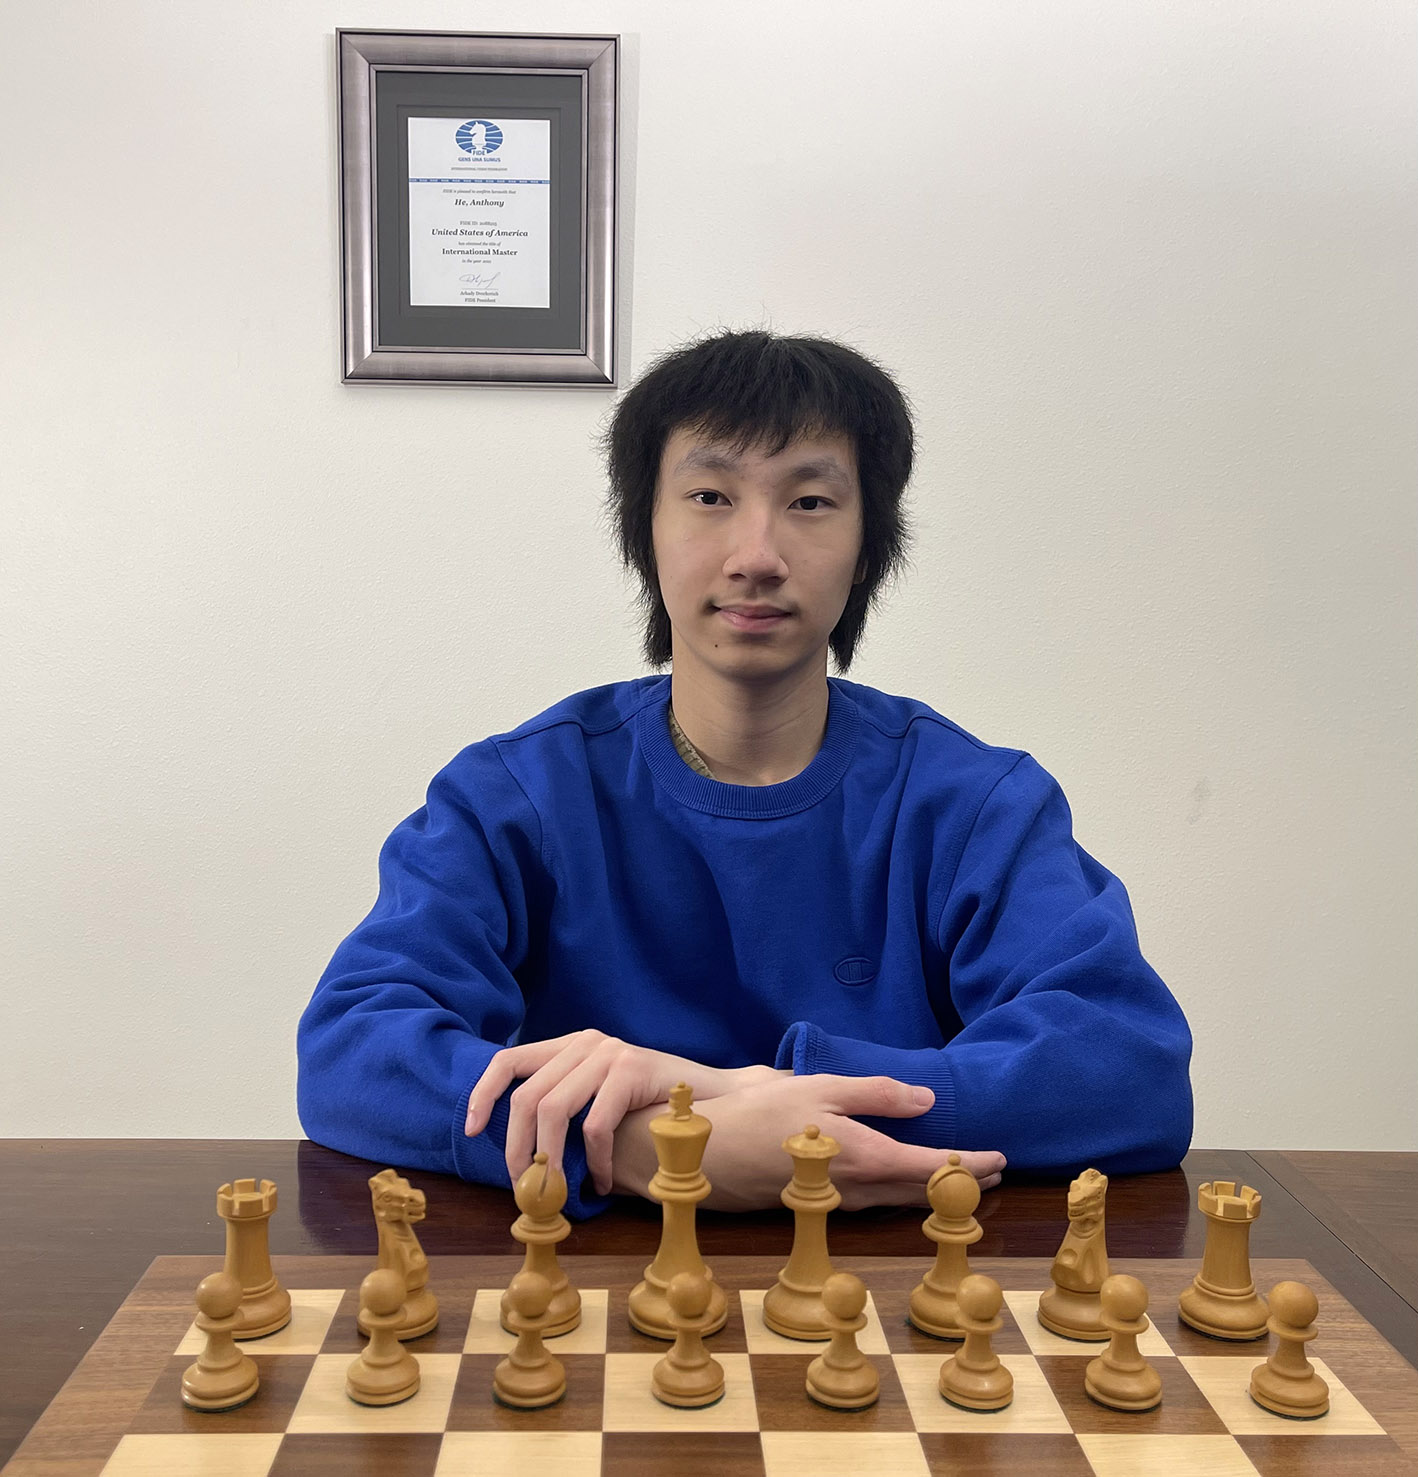 Northwest Washington Scholastic Chess - Writing Down Moves